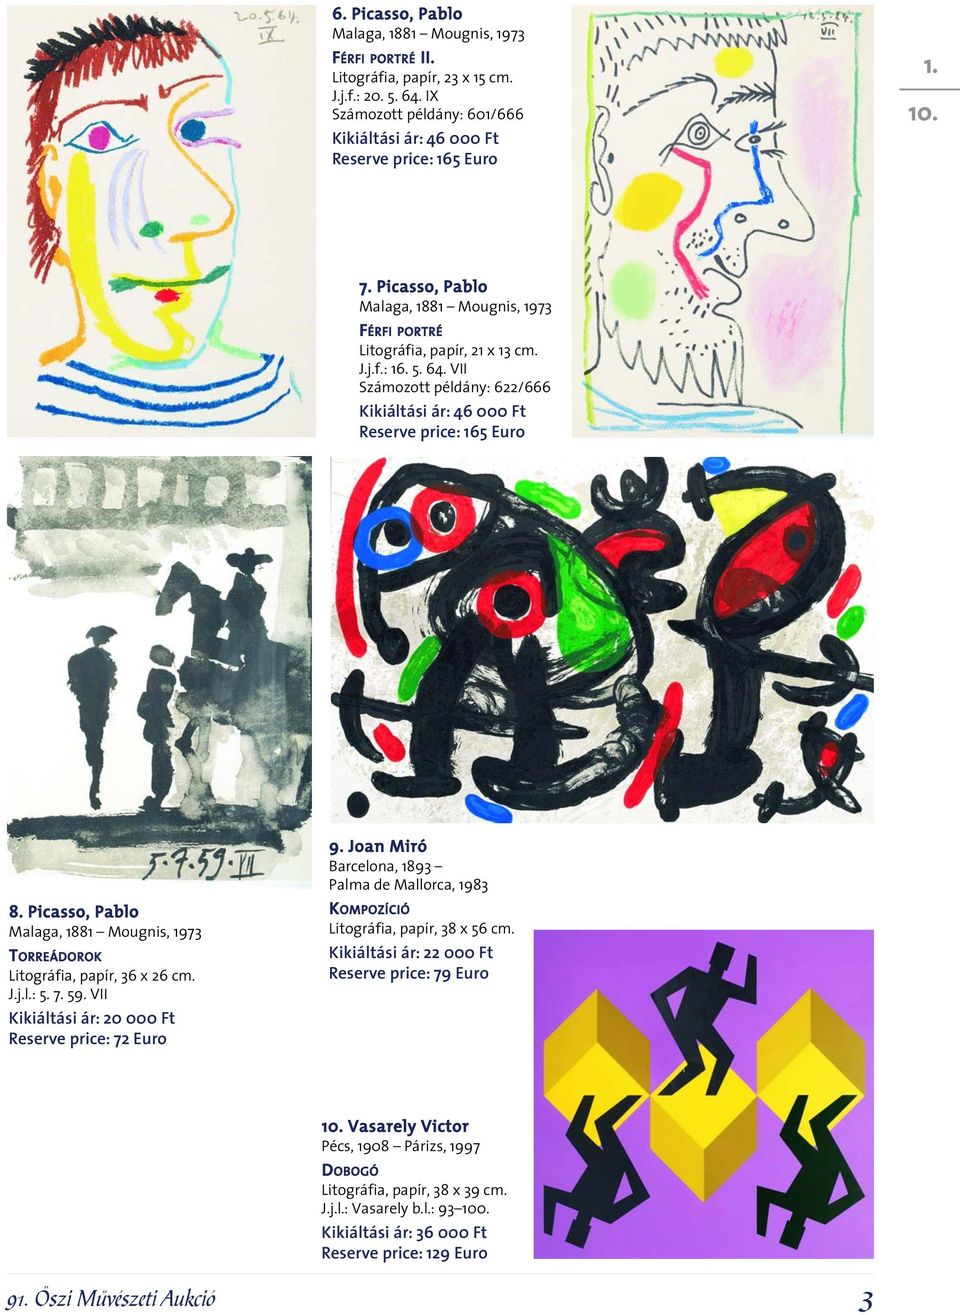 Joan Miró Barcelona, 1893 Palma de Mallorca, 1983 8. Picasso, Pablo Malaga, 1881 Mougnis, 1973 TORREÁDOROK Litográfia, papír, 36 x 26 cm. J.j.l.: 5. 7. 59.